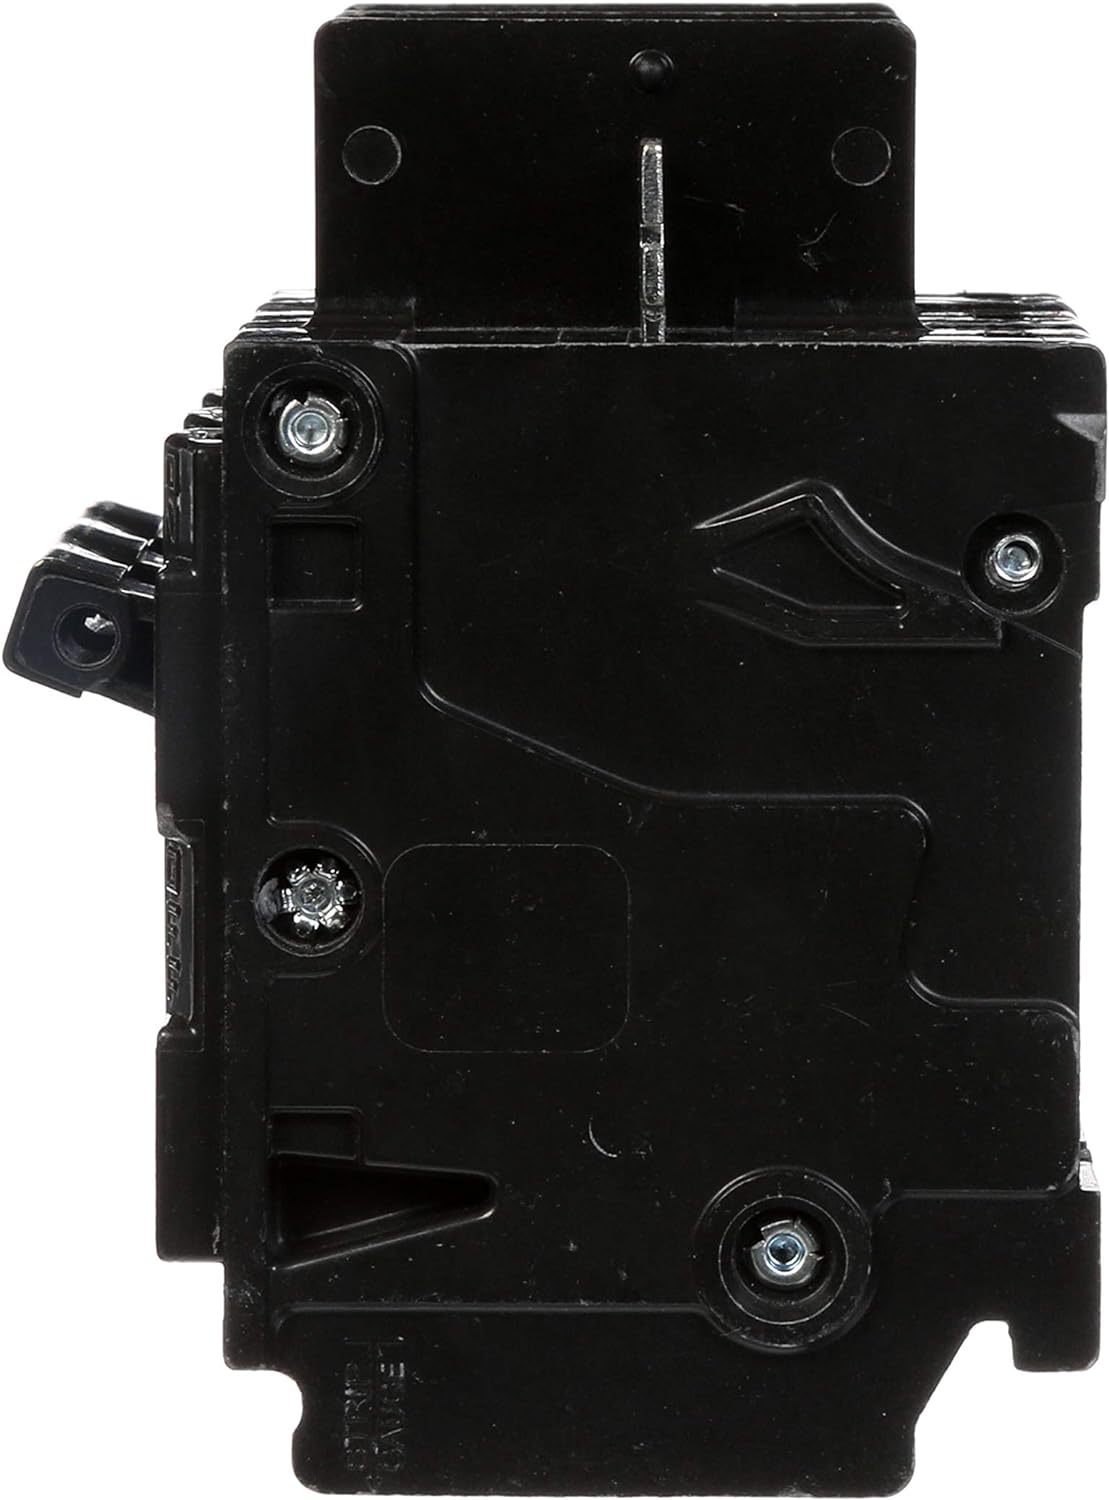 BQ3B050H - Siemens - 50 Amp Molded Case Circuit Breaker